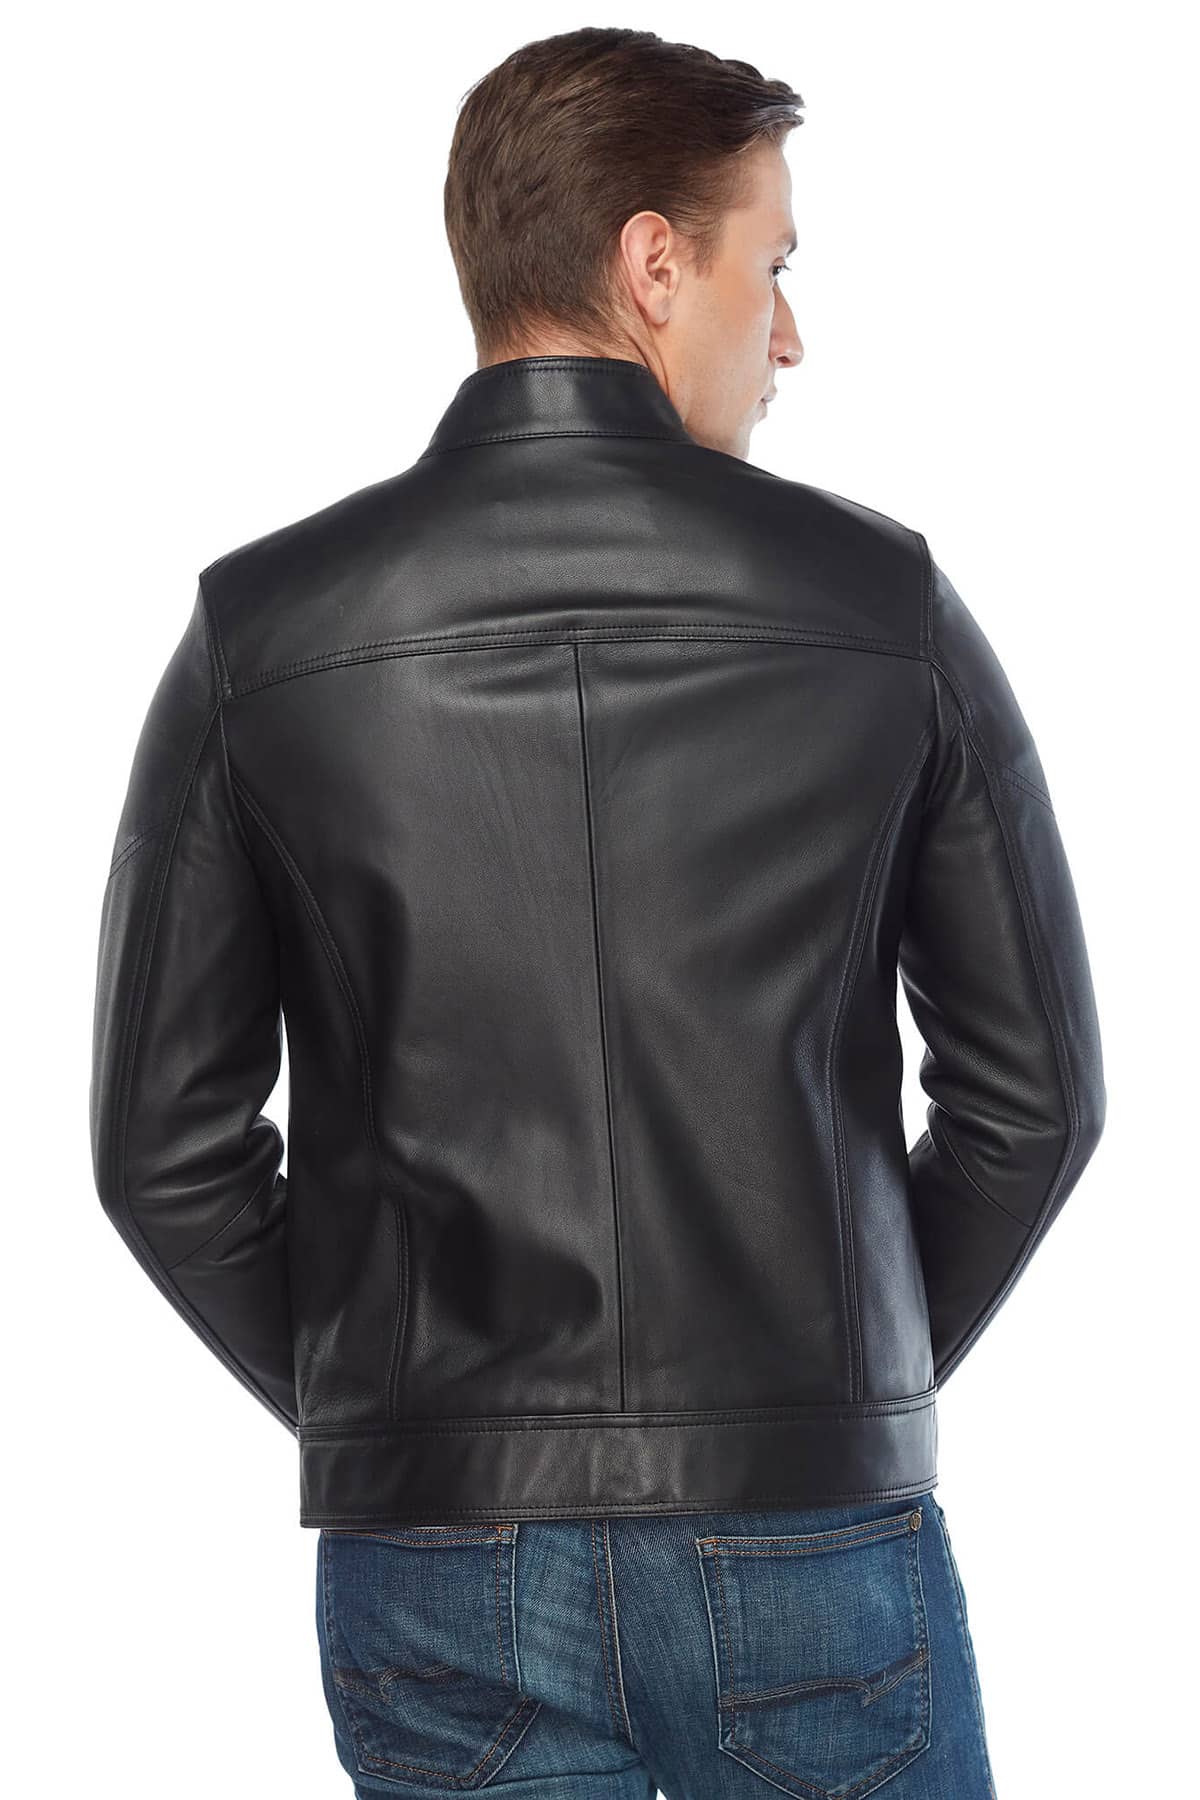 David Beckham Genuine Leather Coat Black Back